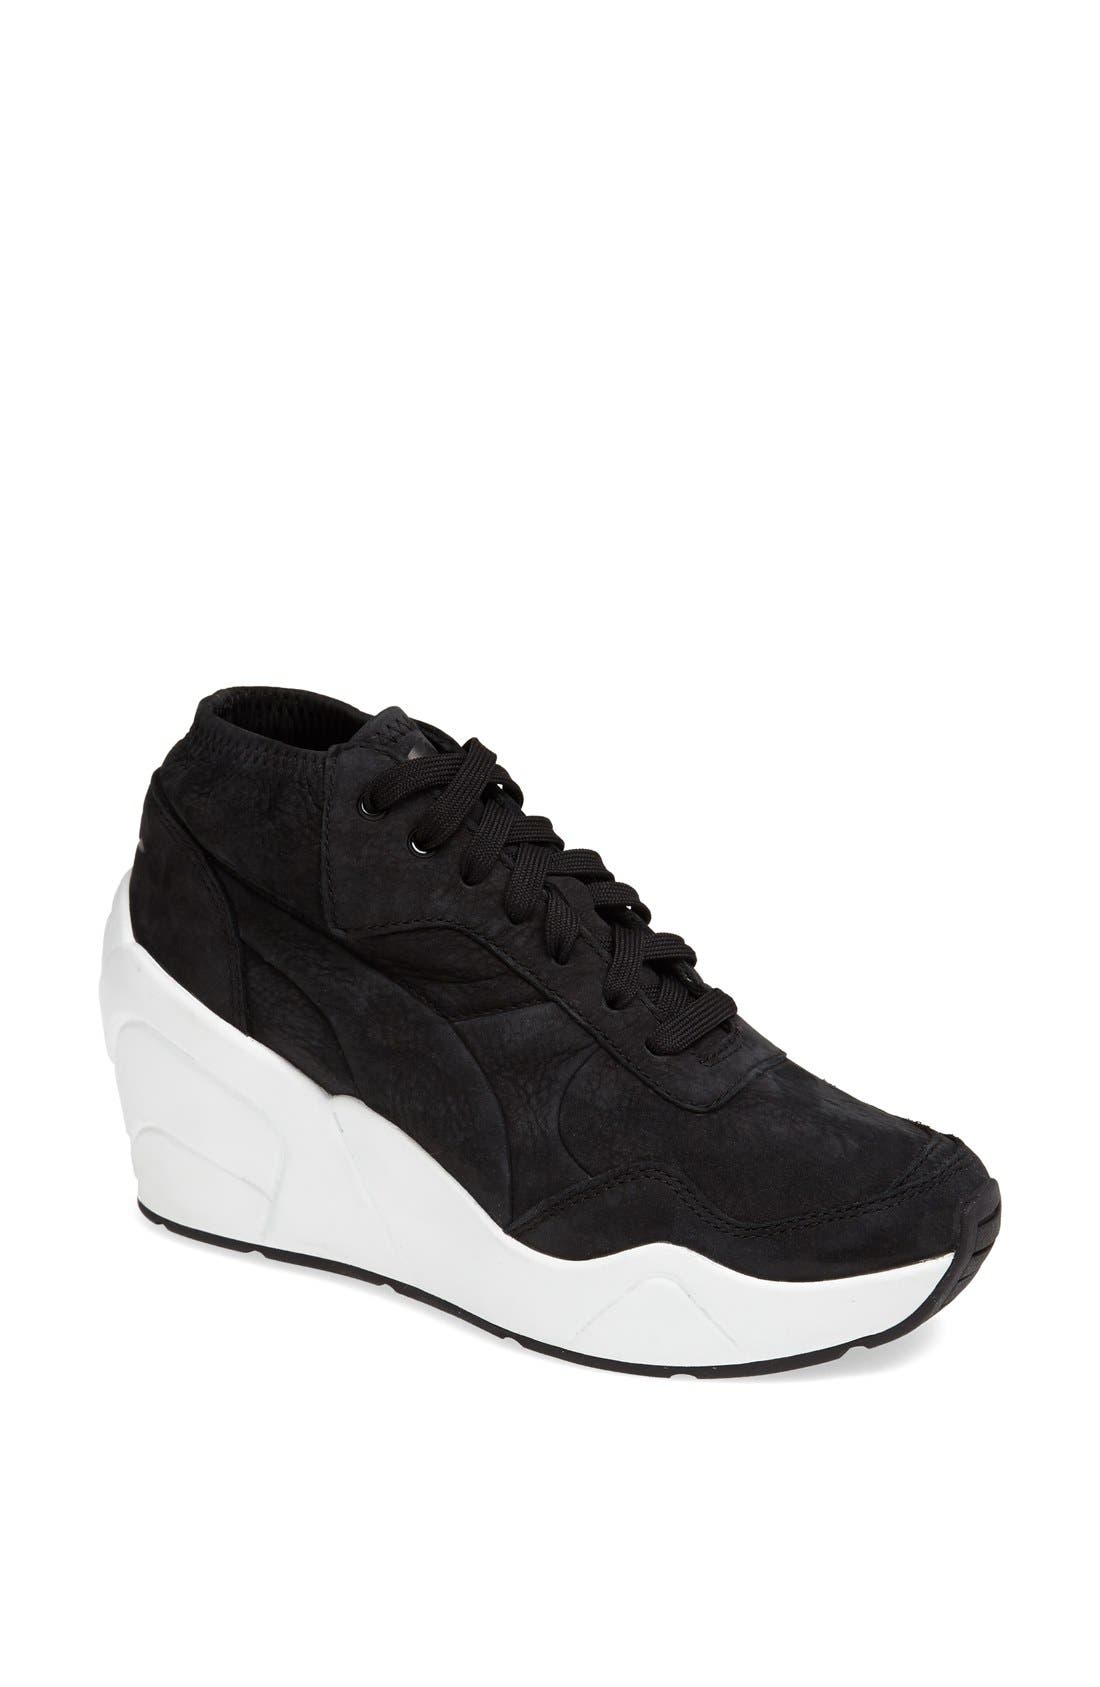 puma trinomic high top wedge sneaker